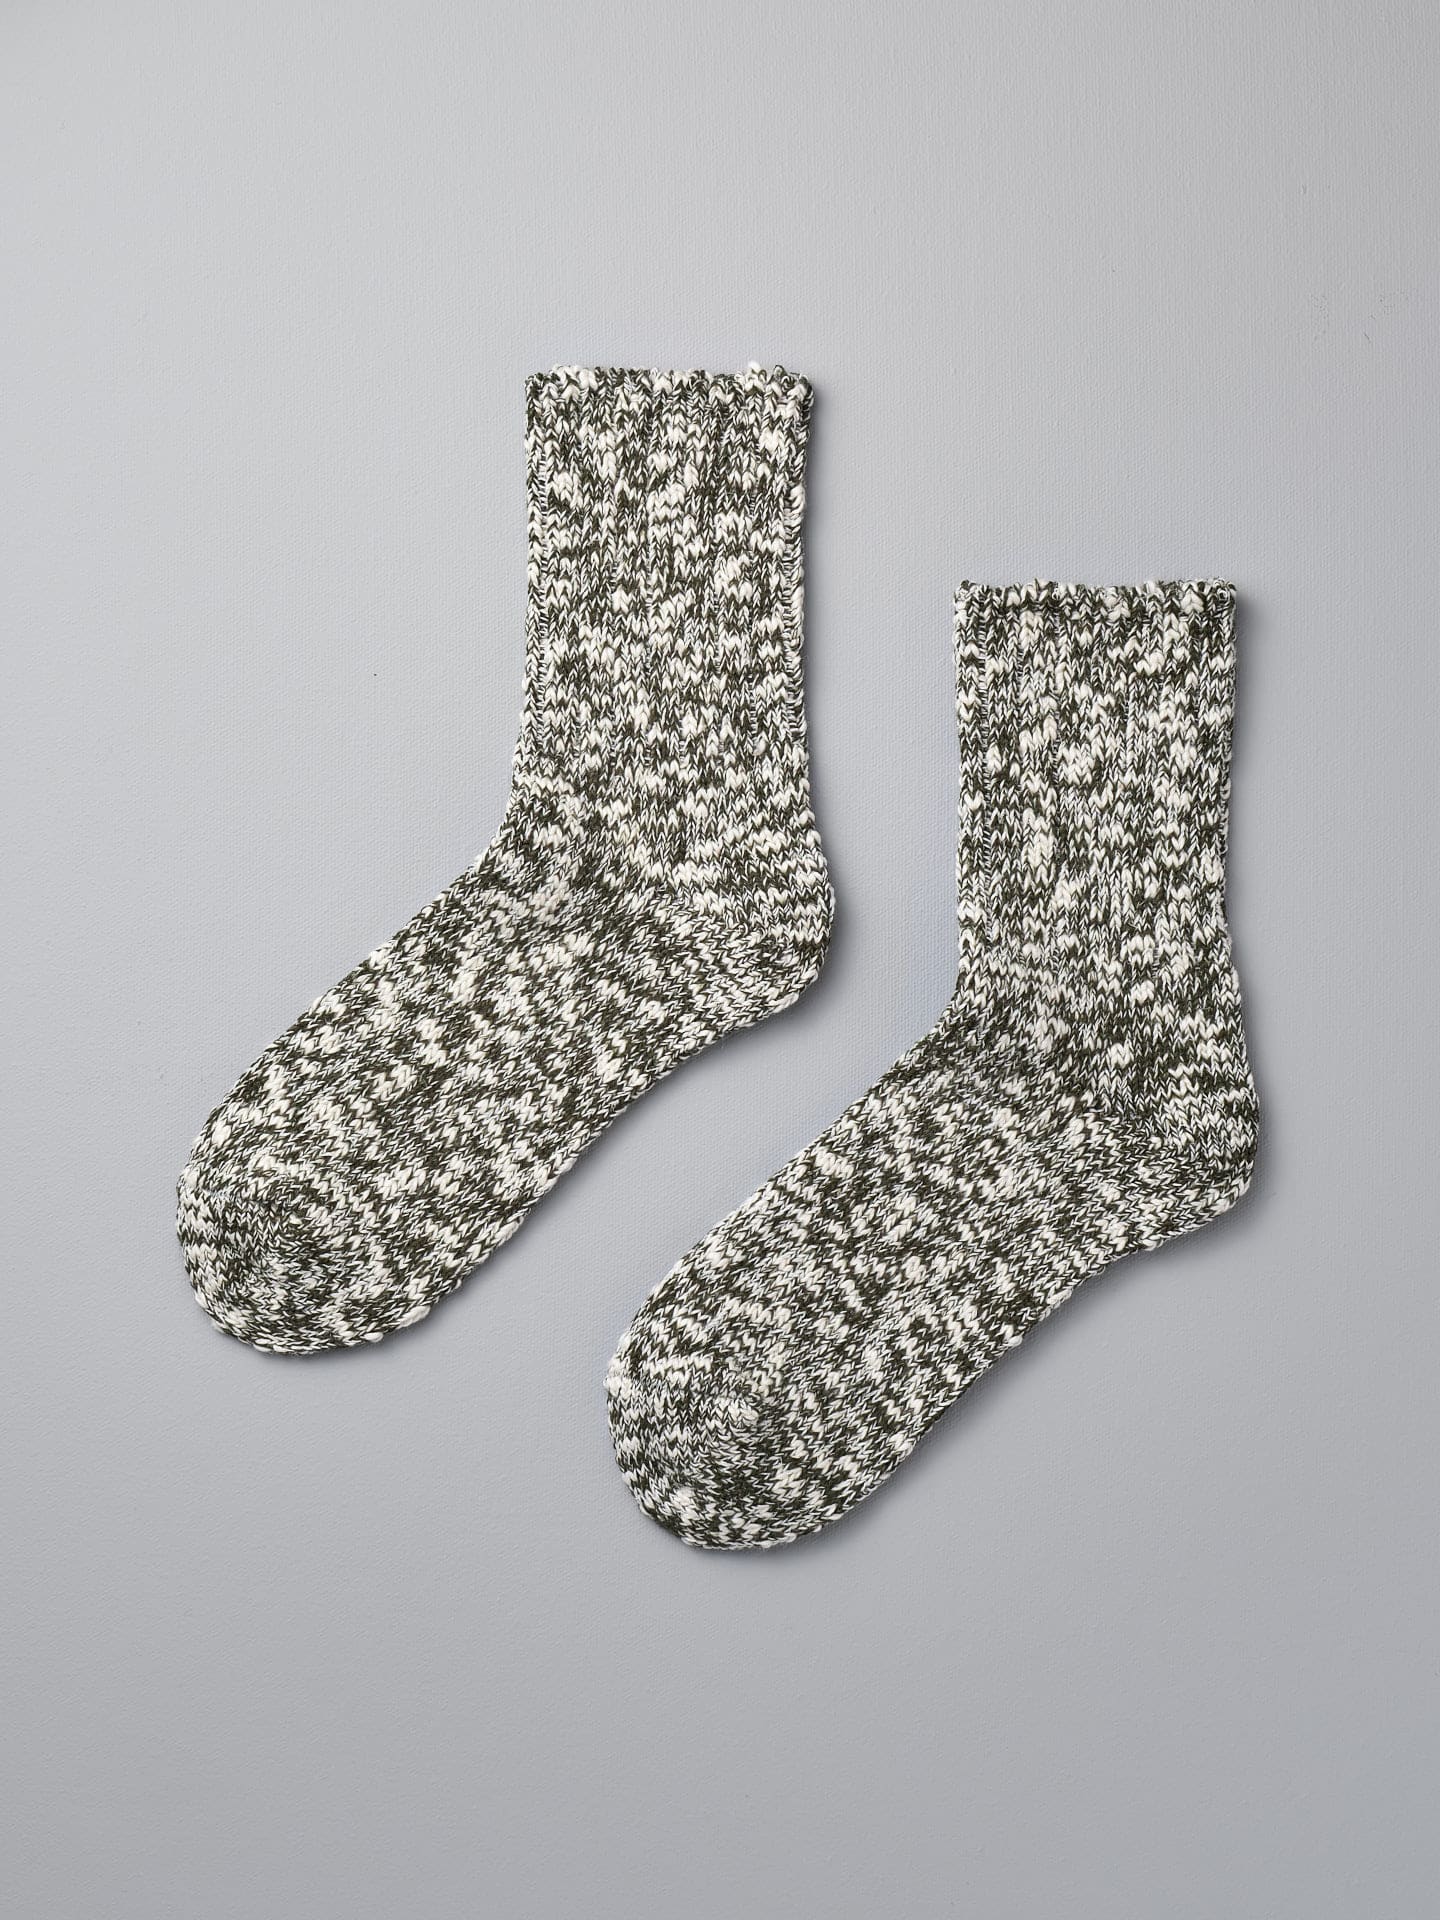 A pair of Japanese Slub Socks – Olive by Mauna Kea on a grey background.